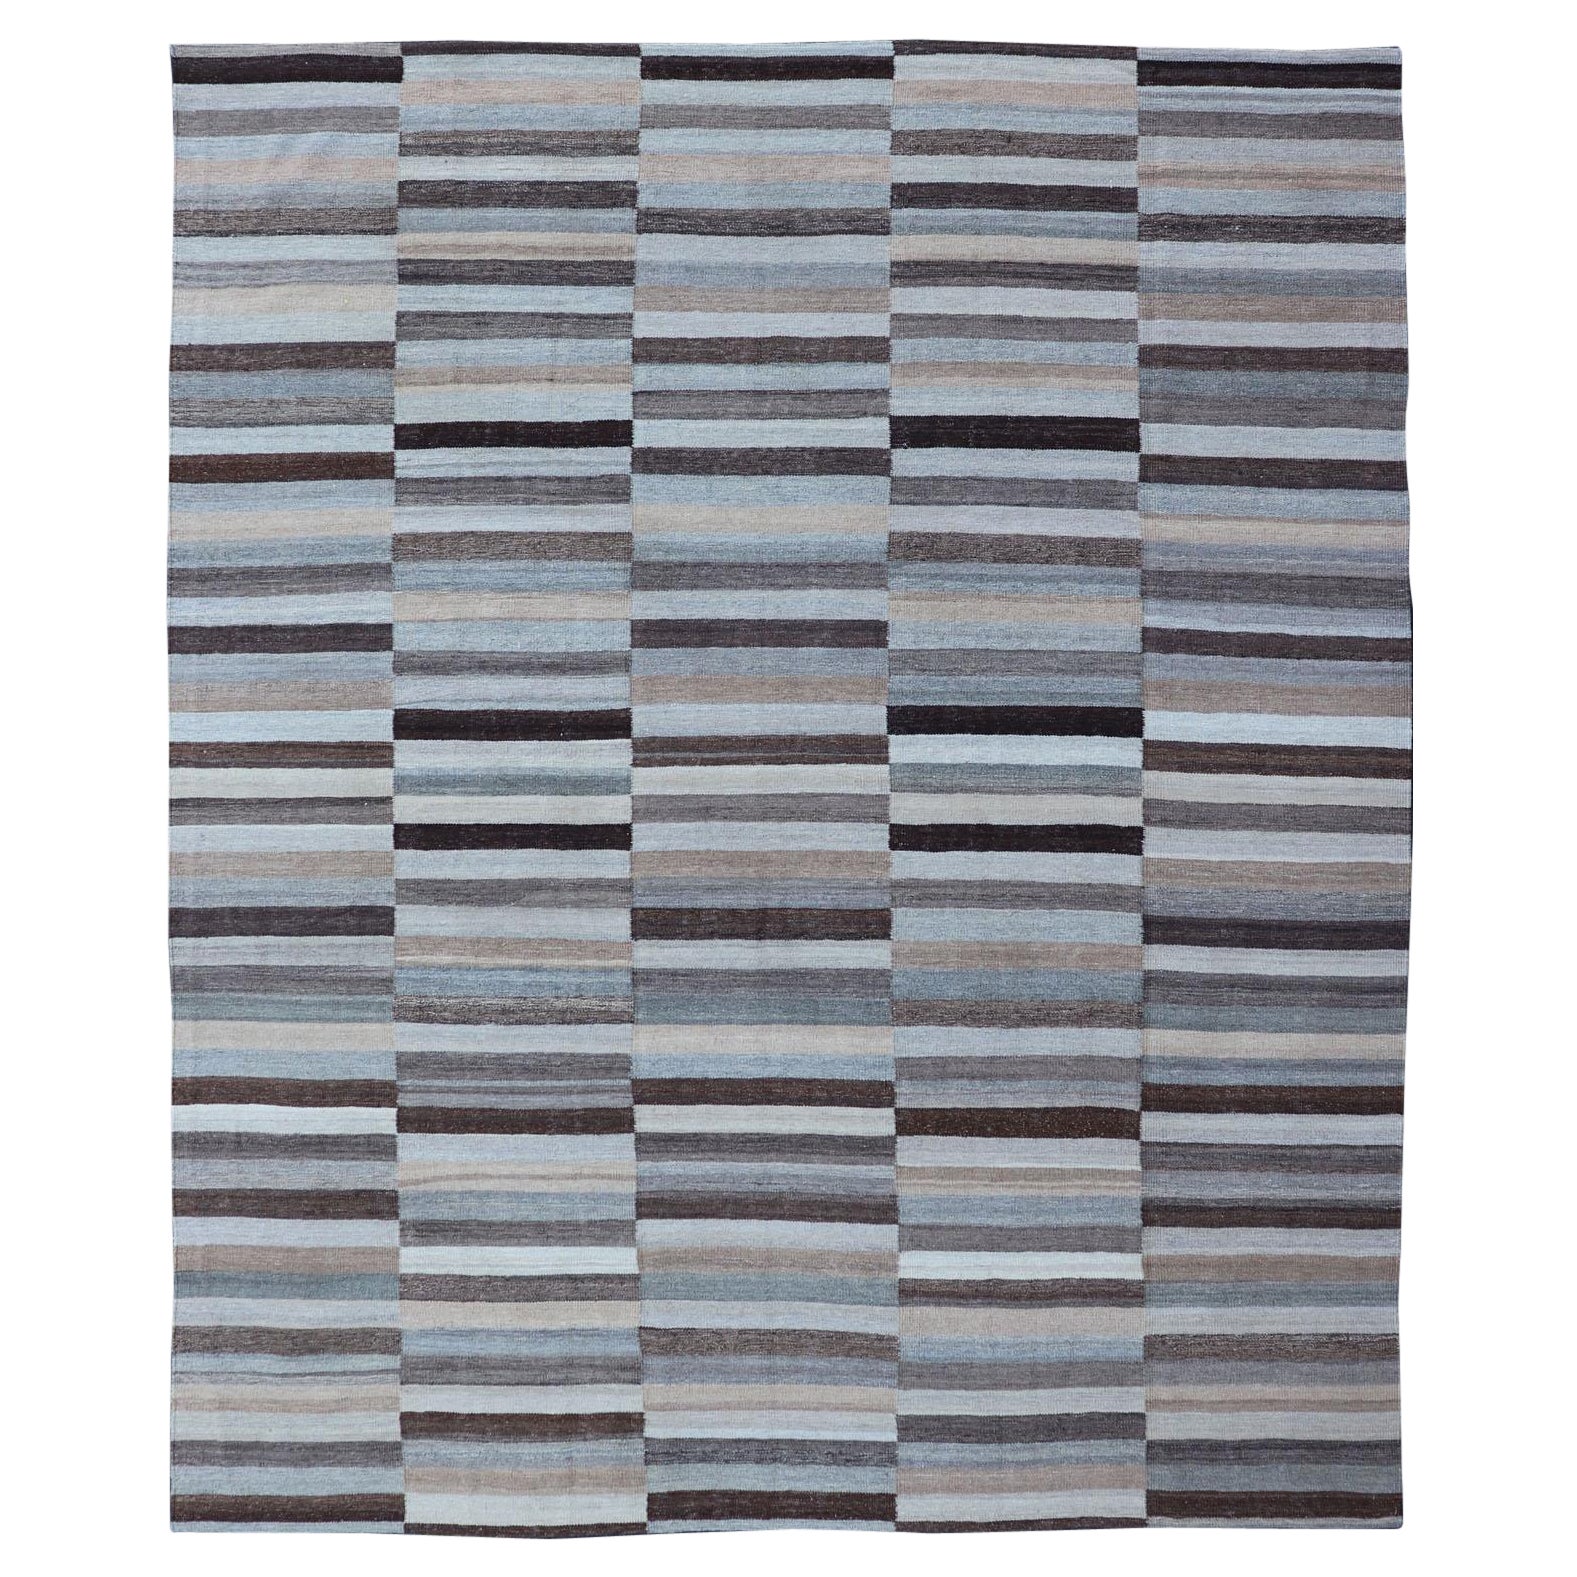 Modern Flat-Weave Kilim Rug in Multi-Panel Striped Design in Earthy Tones